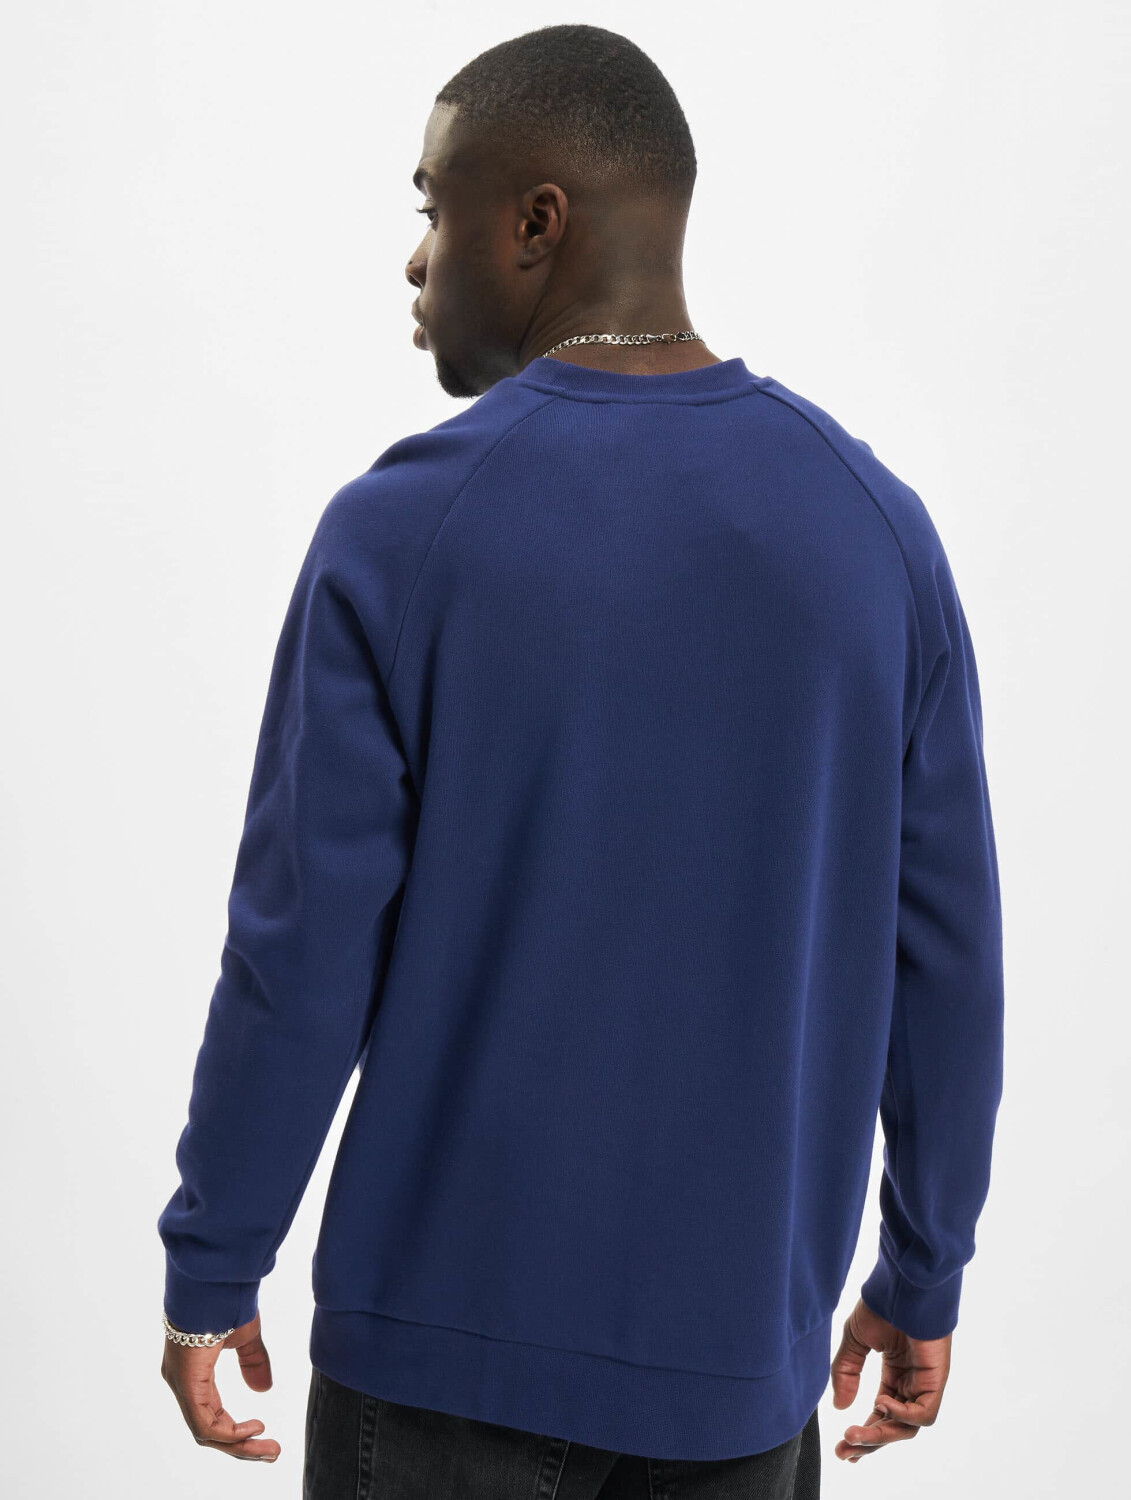 Buy Adidas adicolor Classics Sweatshirt Best from on – £22.99 dark (H06654) Deals blue (Today) Trefoil